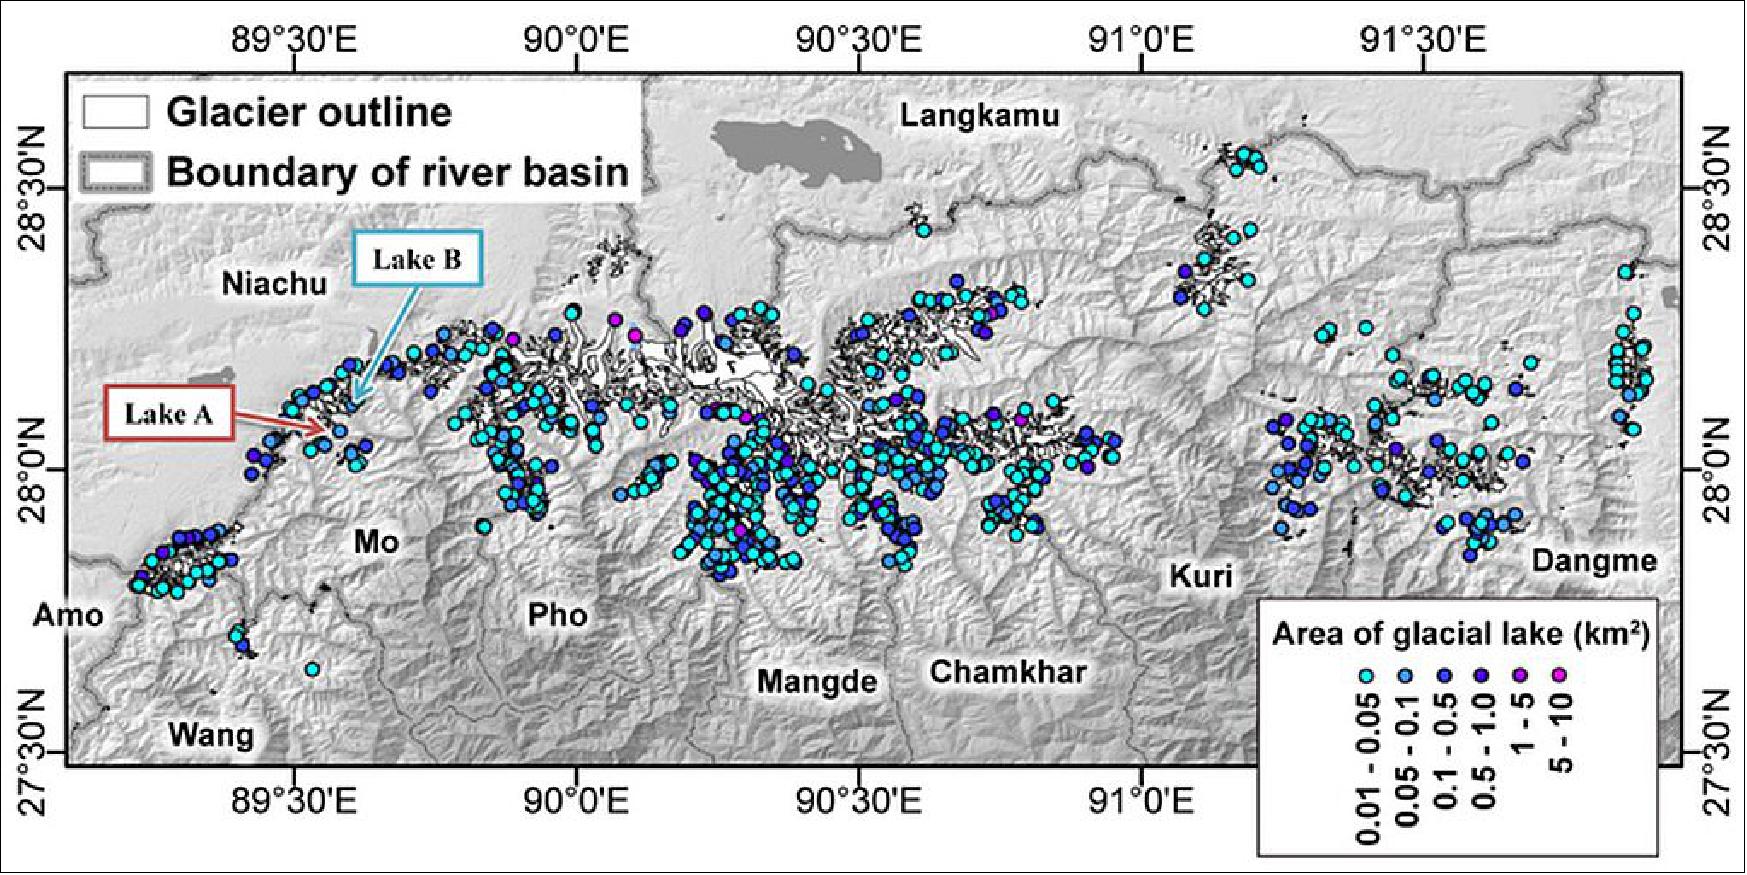 Figure 46: Location of the glacier lakes in the Bhutan Himalaya region (image credit: JAXA/EORC)